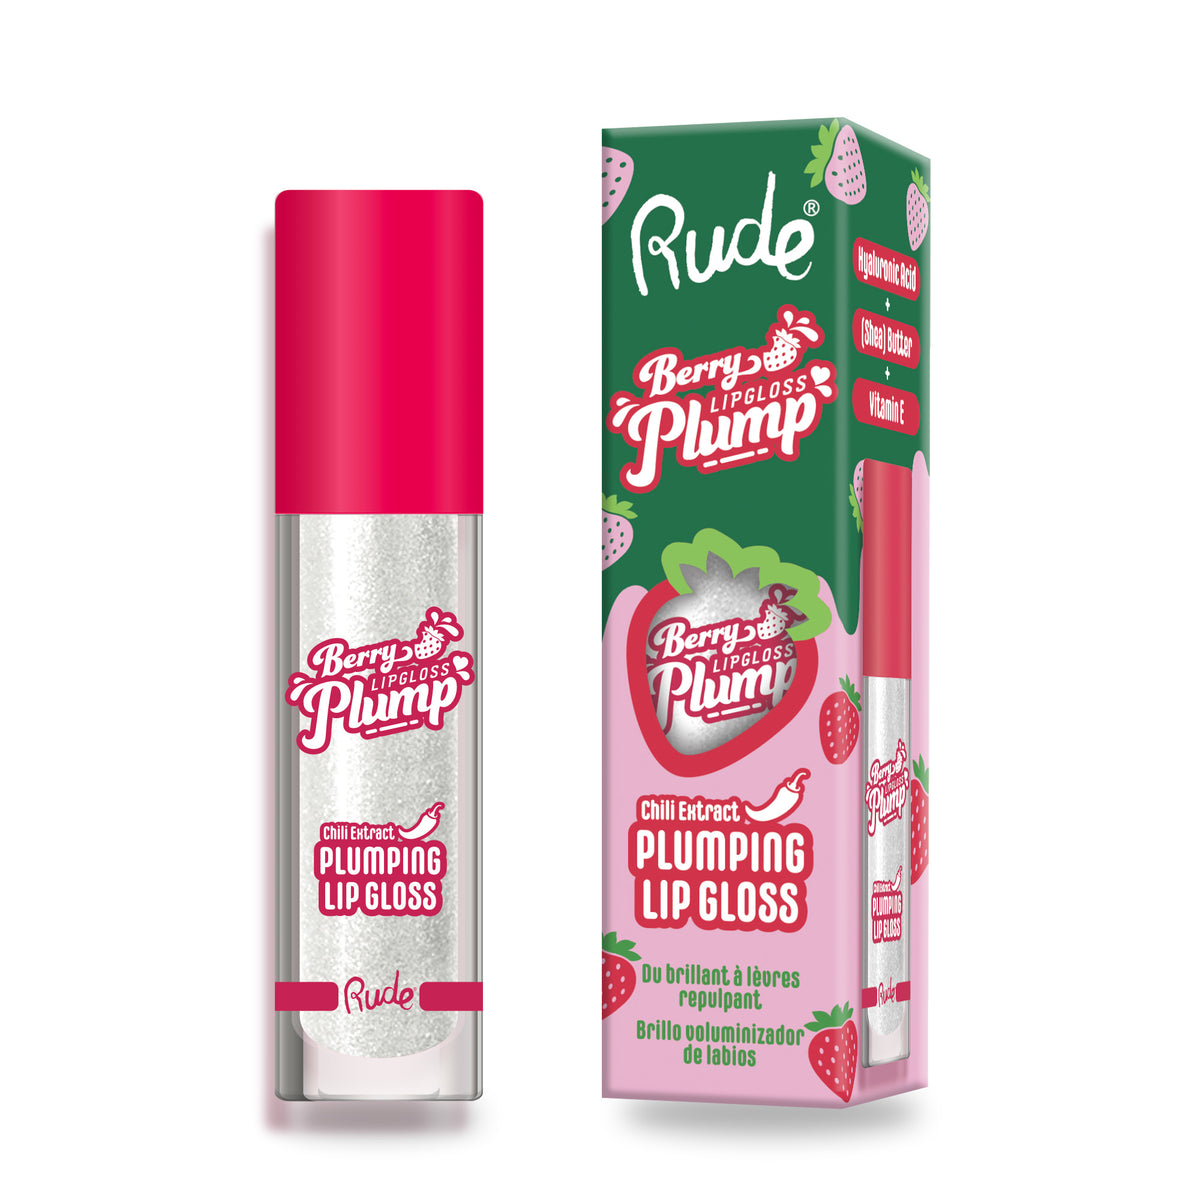 Berry Plump Plumping Lip Gloss Display Set, 64 pcs